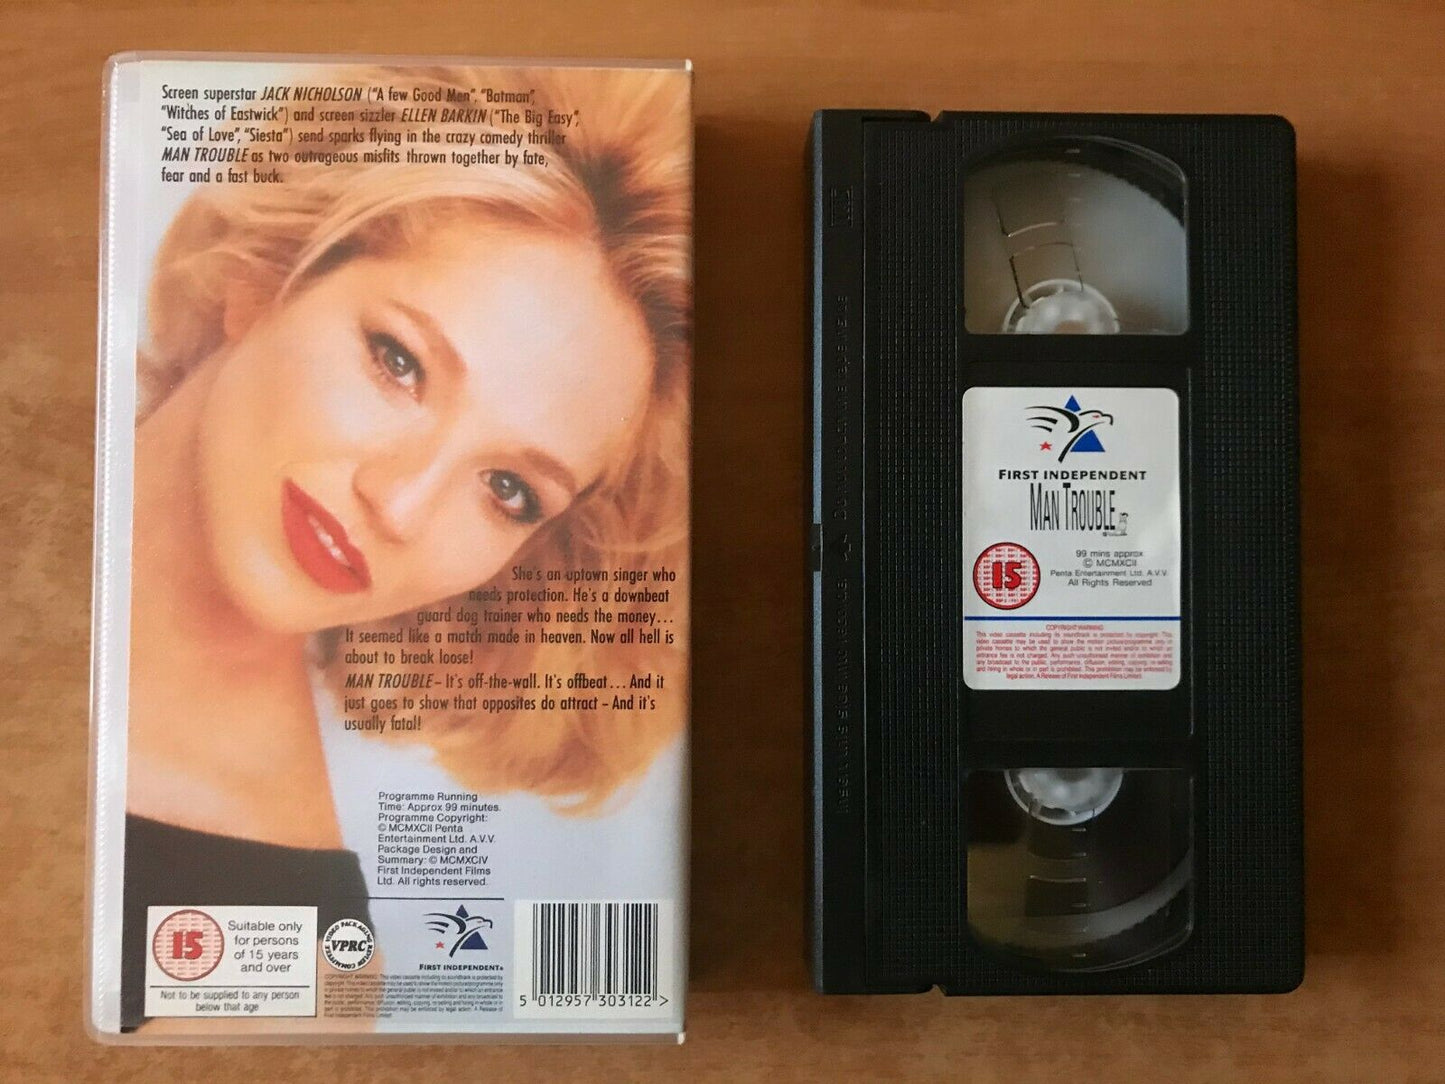 Man Trouble (1992): Romantic Comedy - Jack Nicholson / Ellen Barkin - Pal VHS-